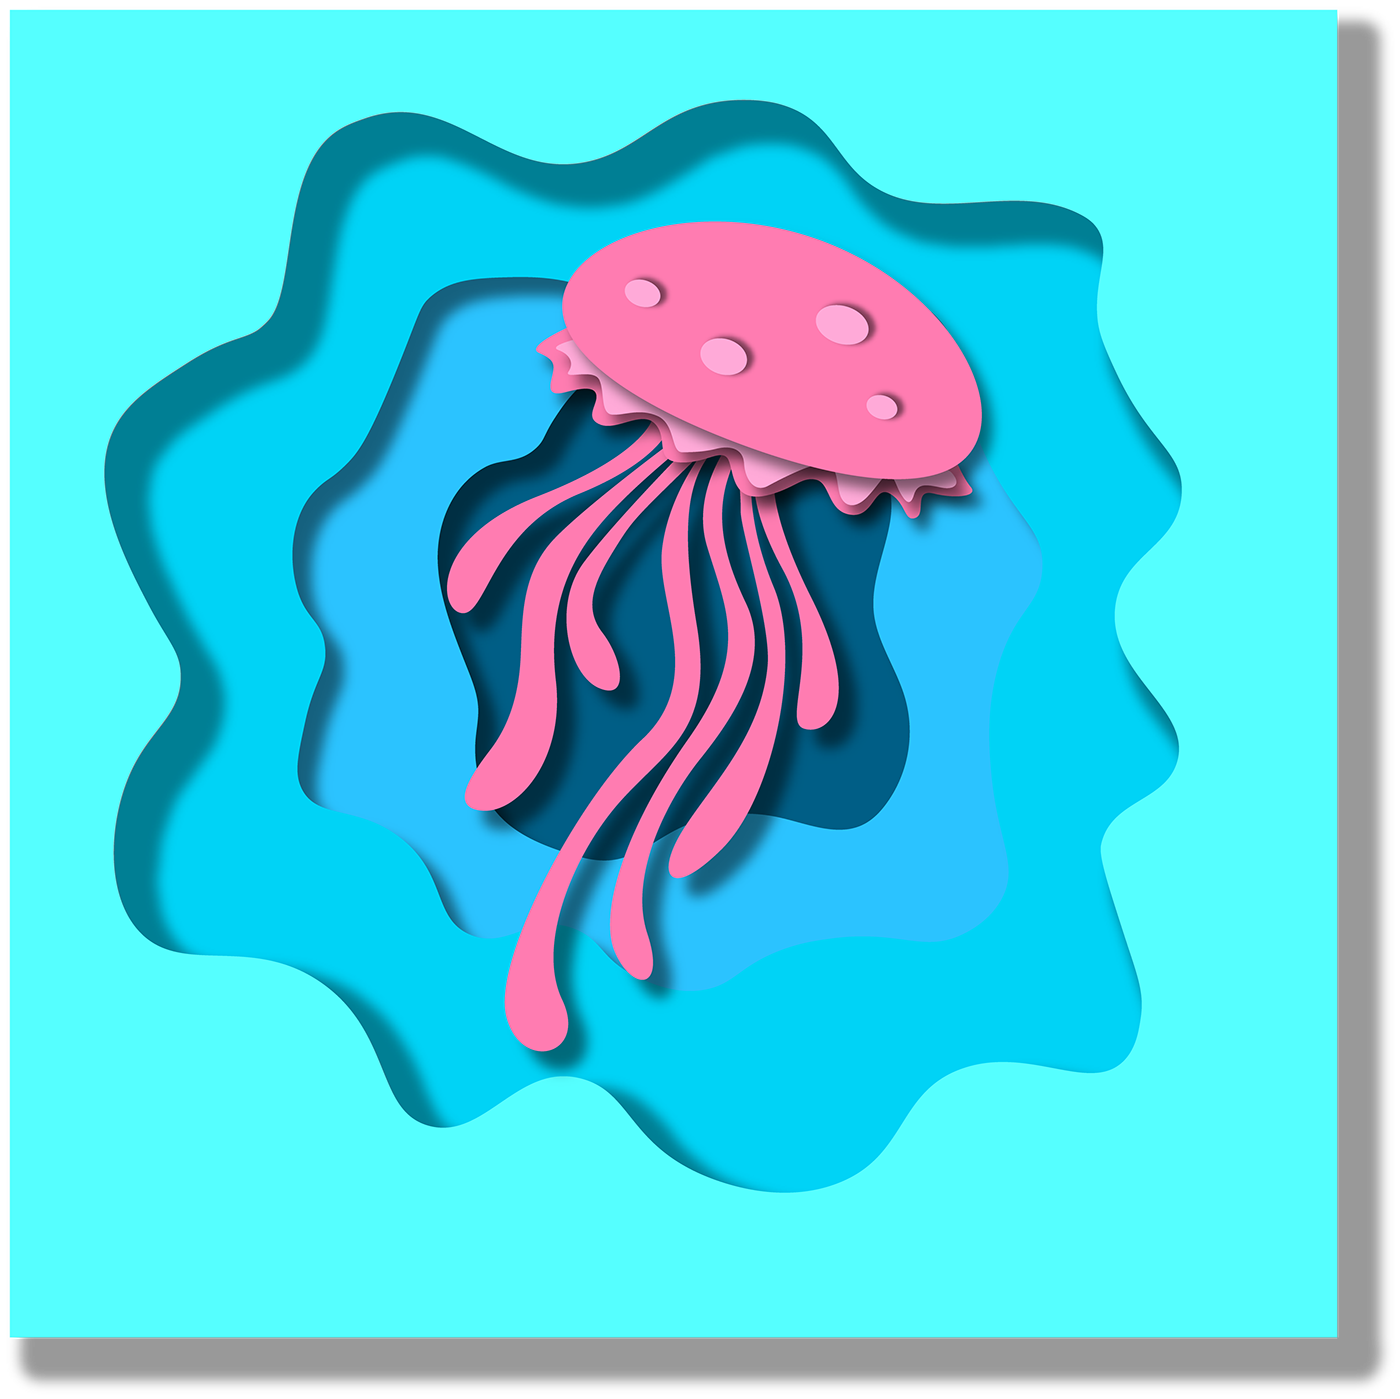 adobe aquatic art work illustratoion Illustrator life octopus paper cut sea animal